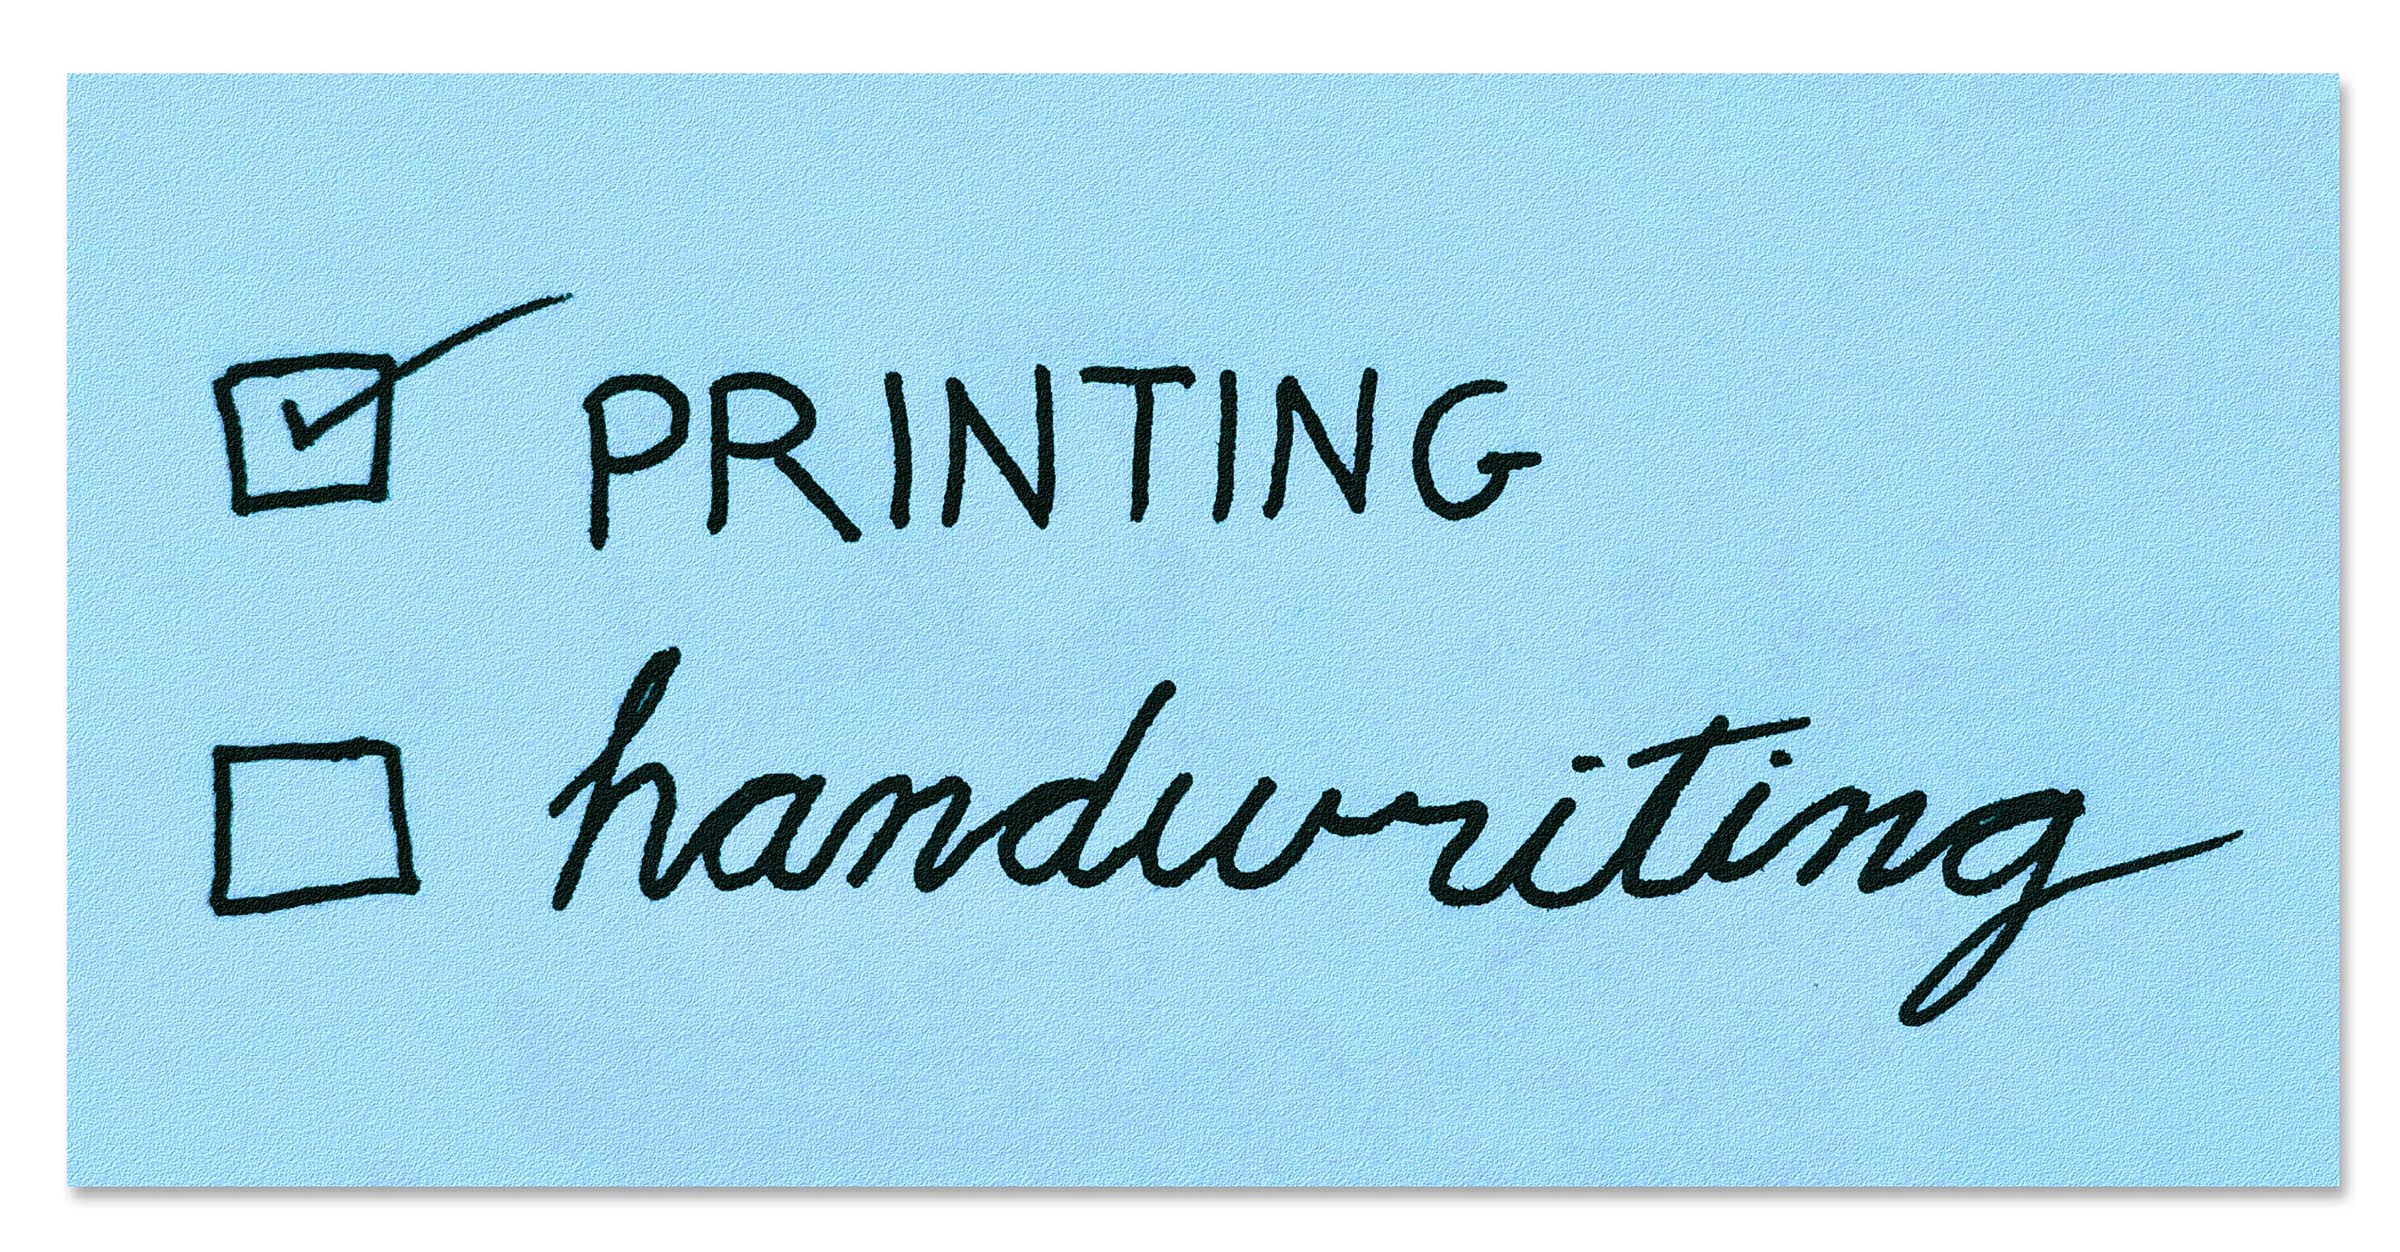 Printing versus Handwriting